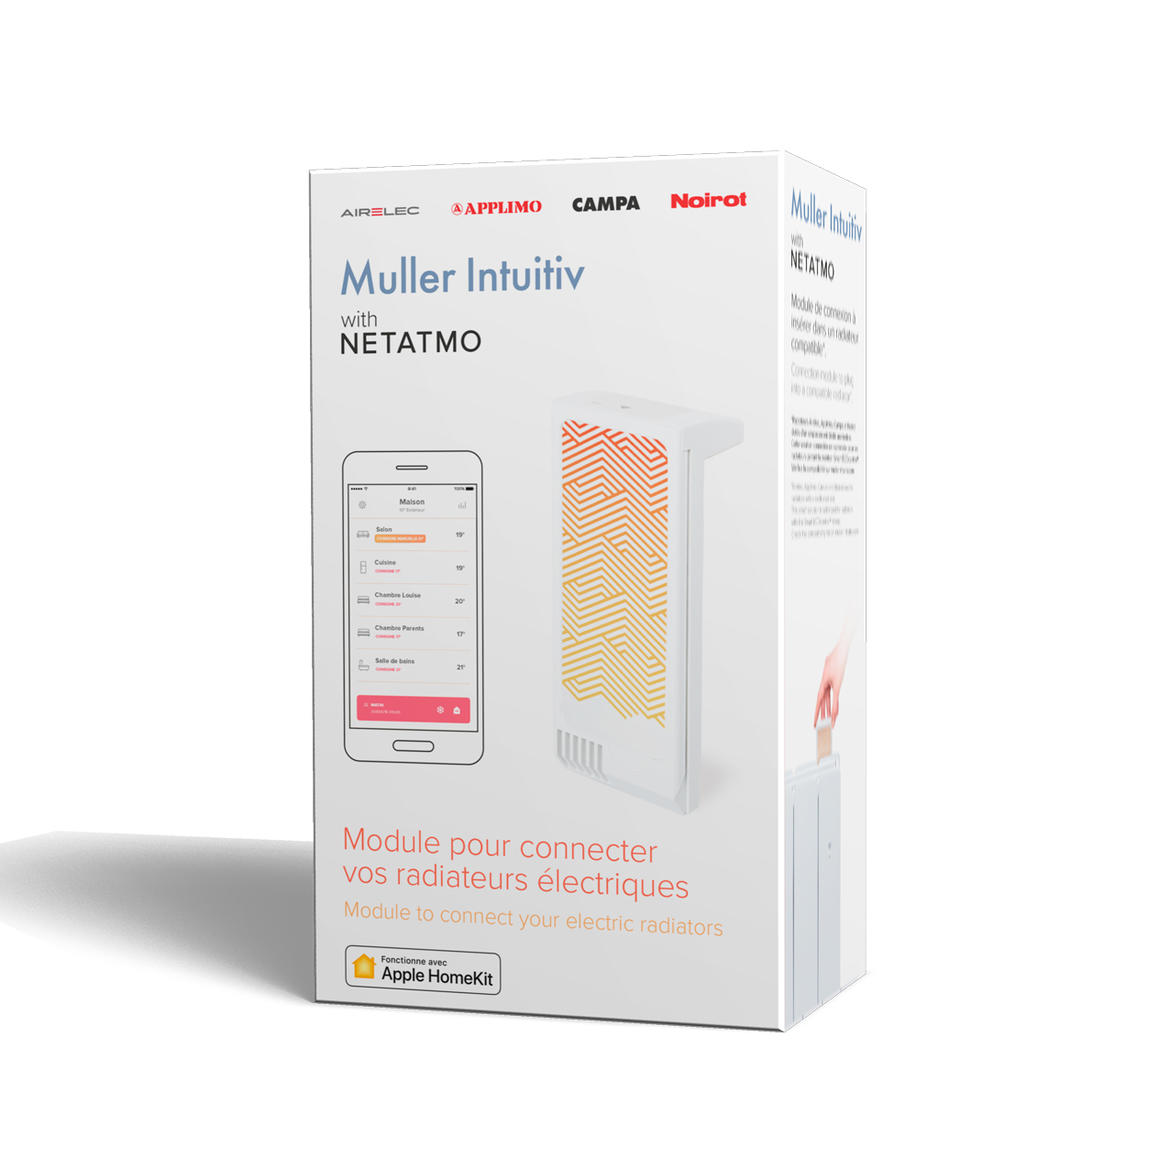 Muller module Intuitiv by Netatmo